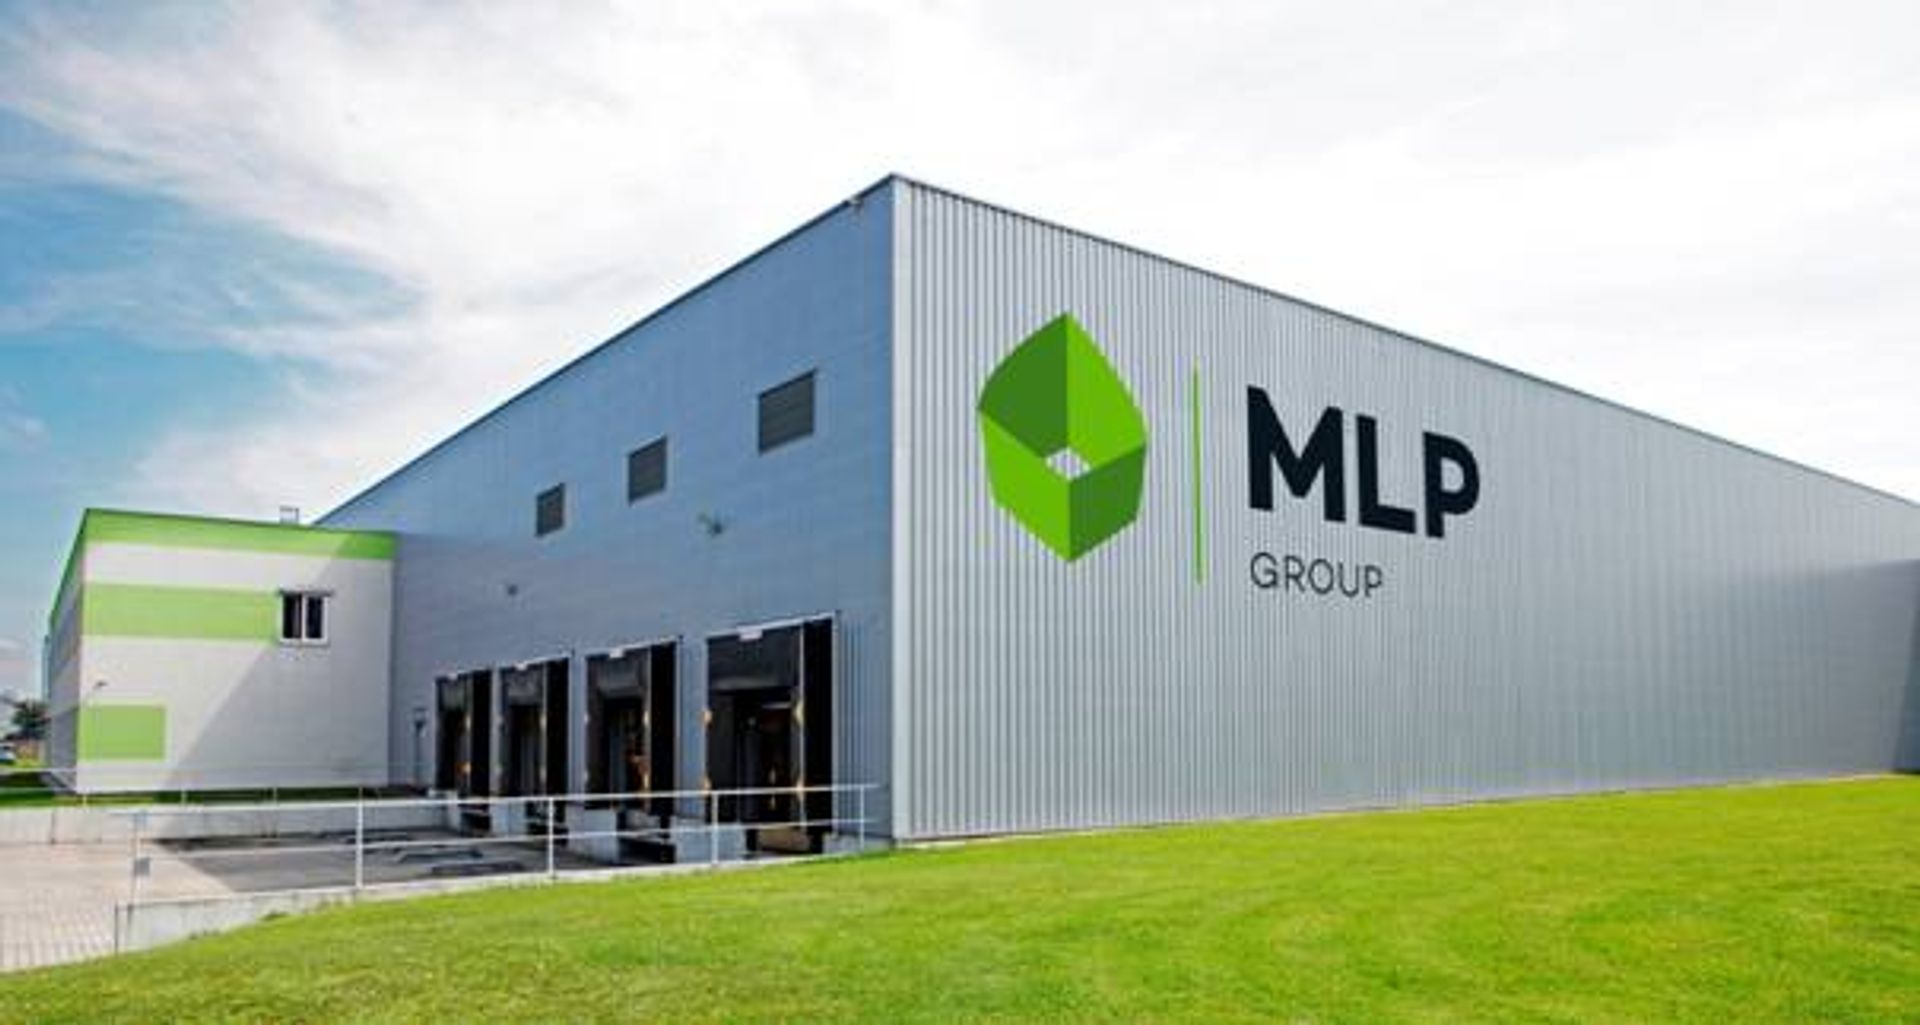  MLP Group poszerza współpracę z Grupą ASG